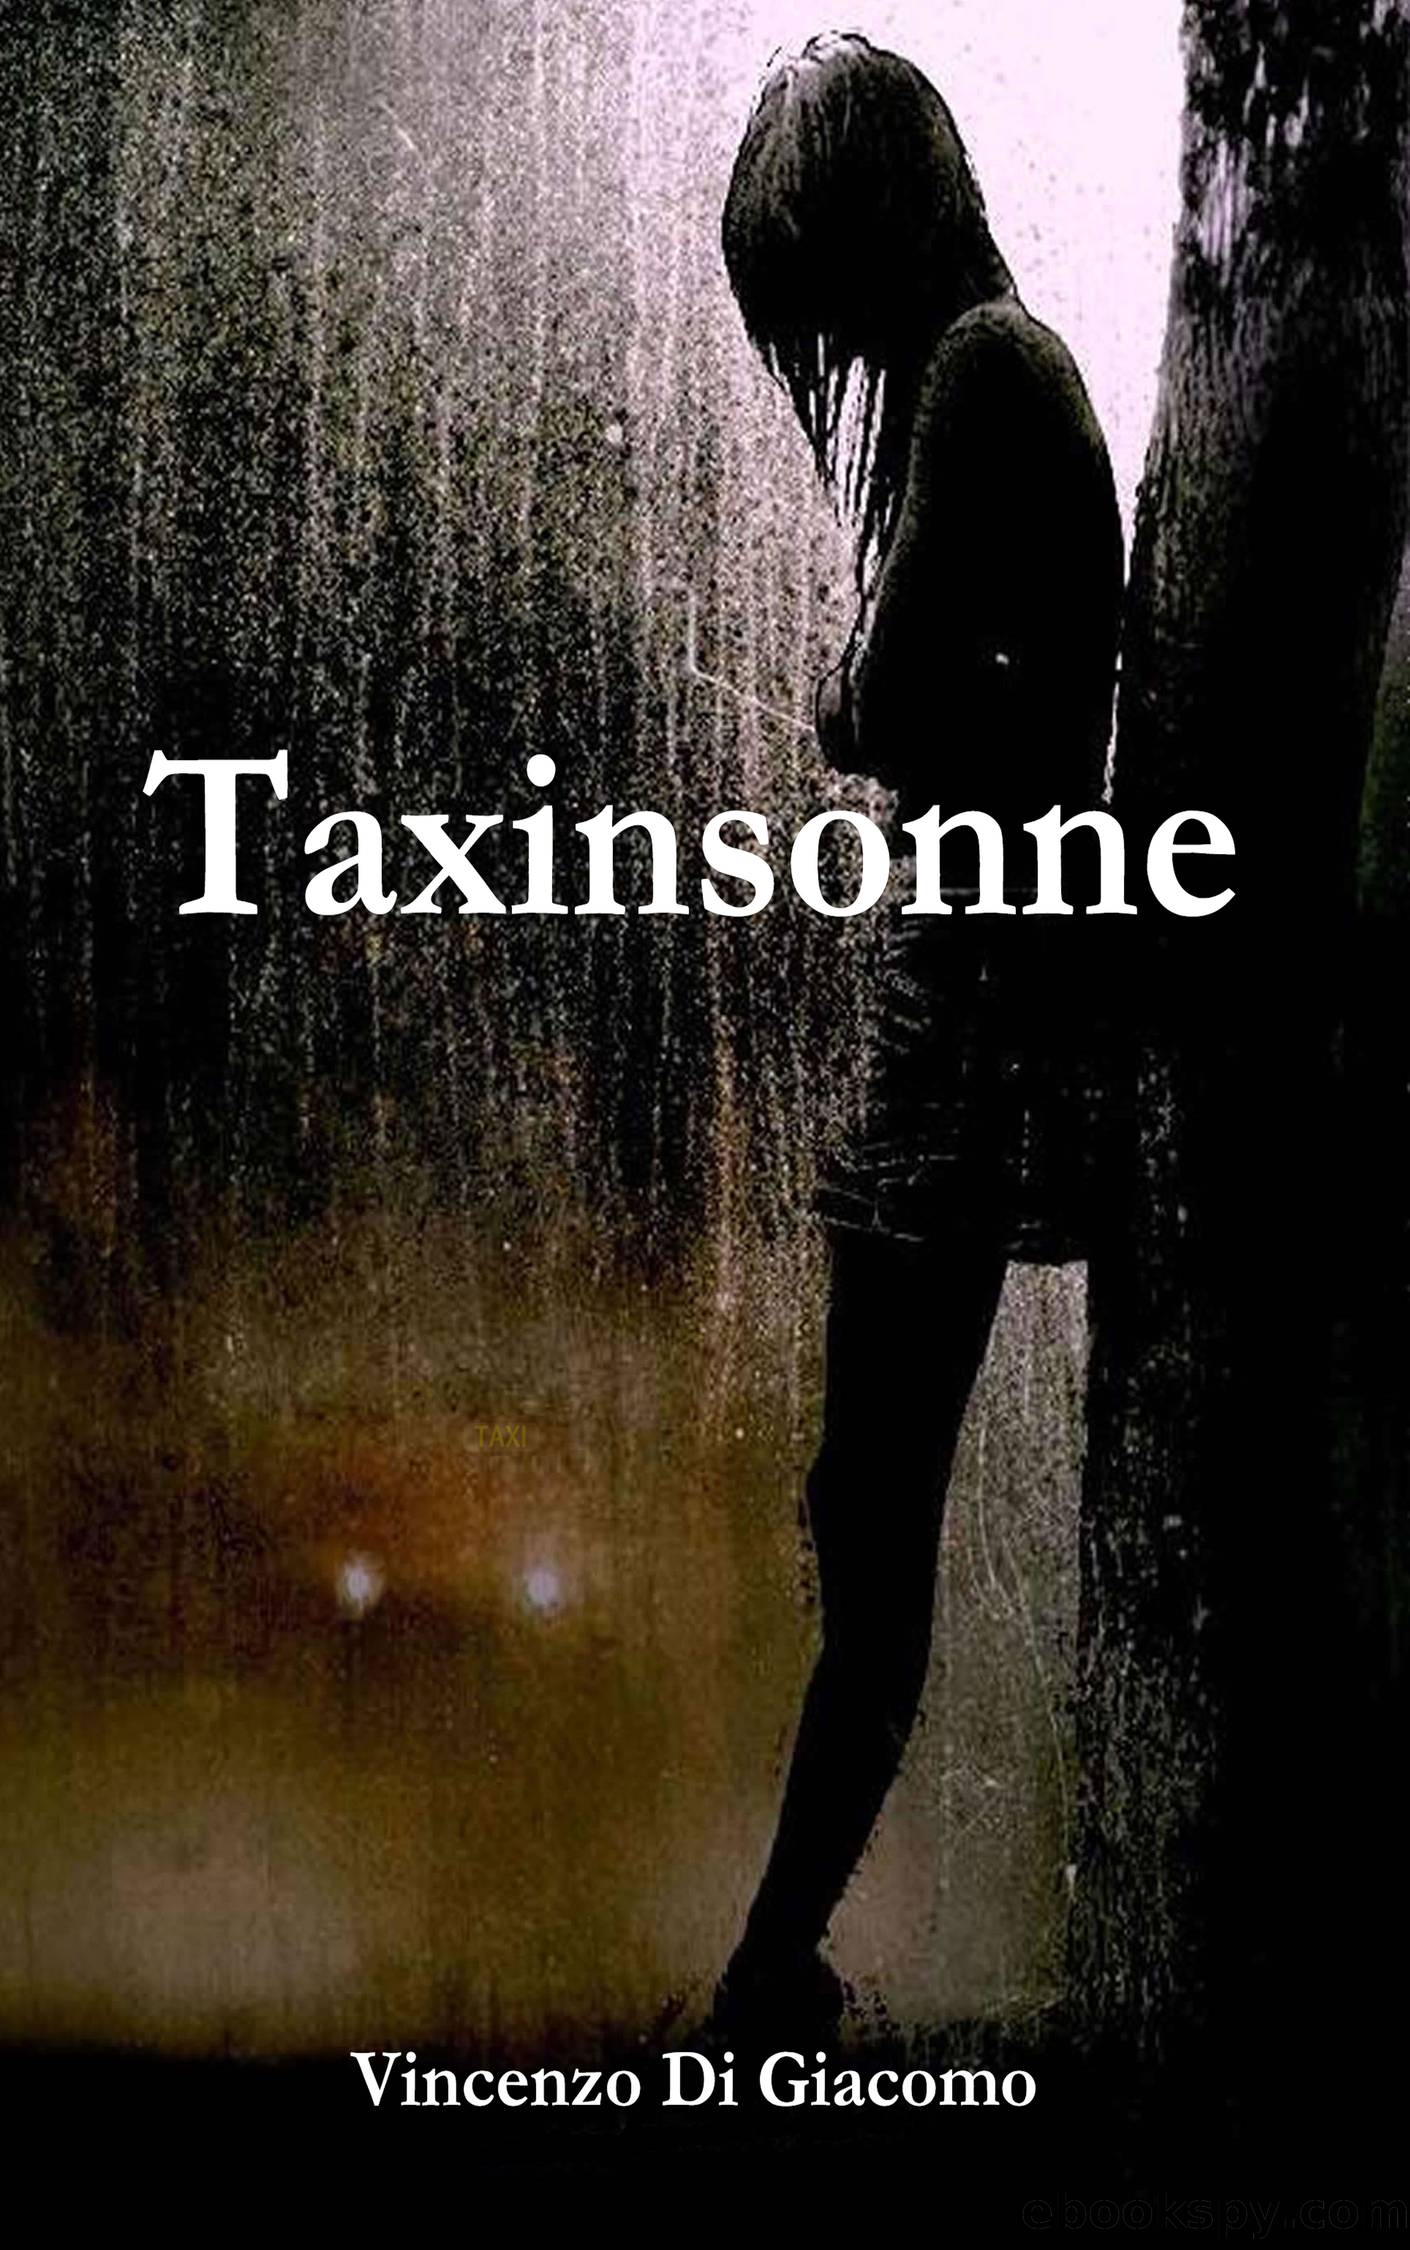 Taxinsonne by Vincenzo Di Giacomo